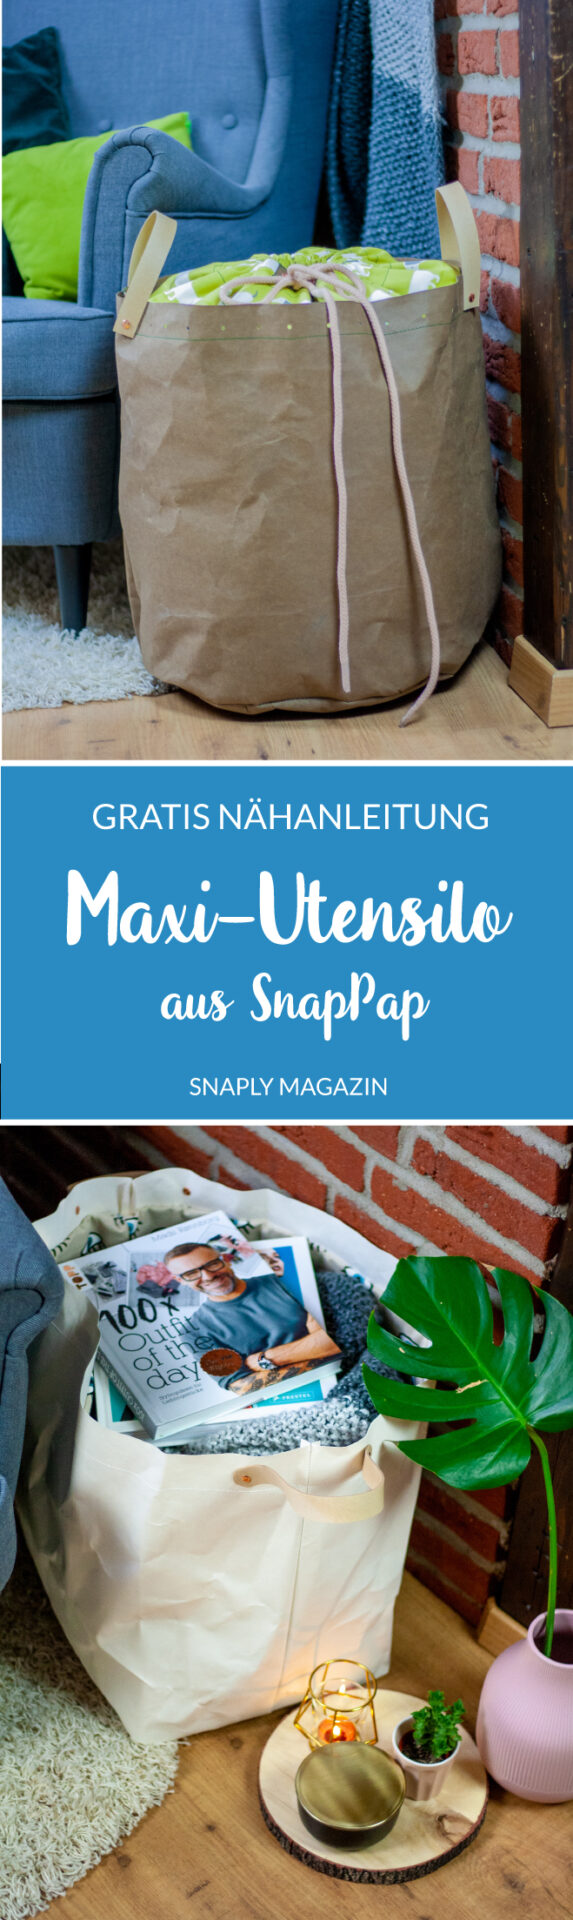 Kostenloses Schnittmuster Maxi-Utensilo aus SnapPap